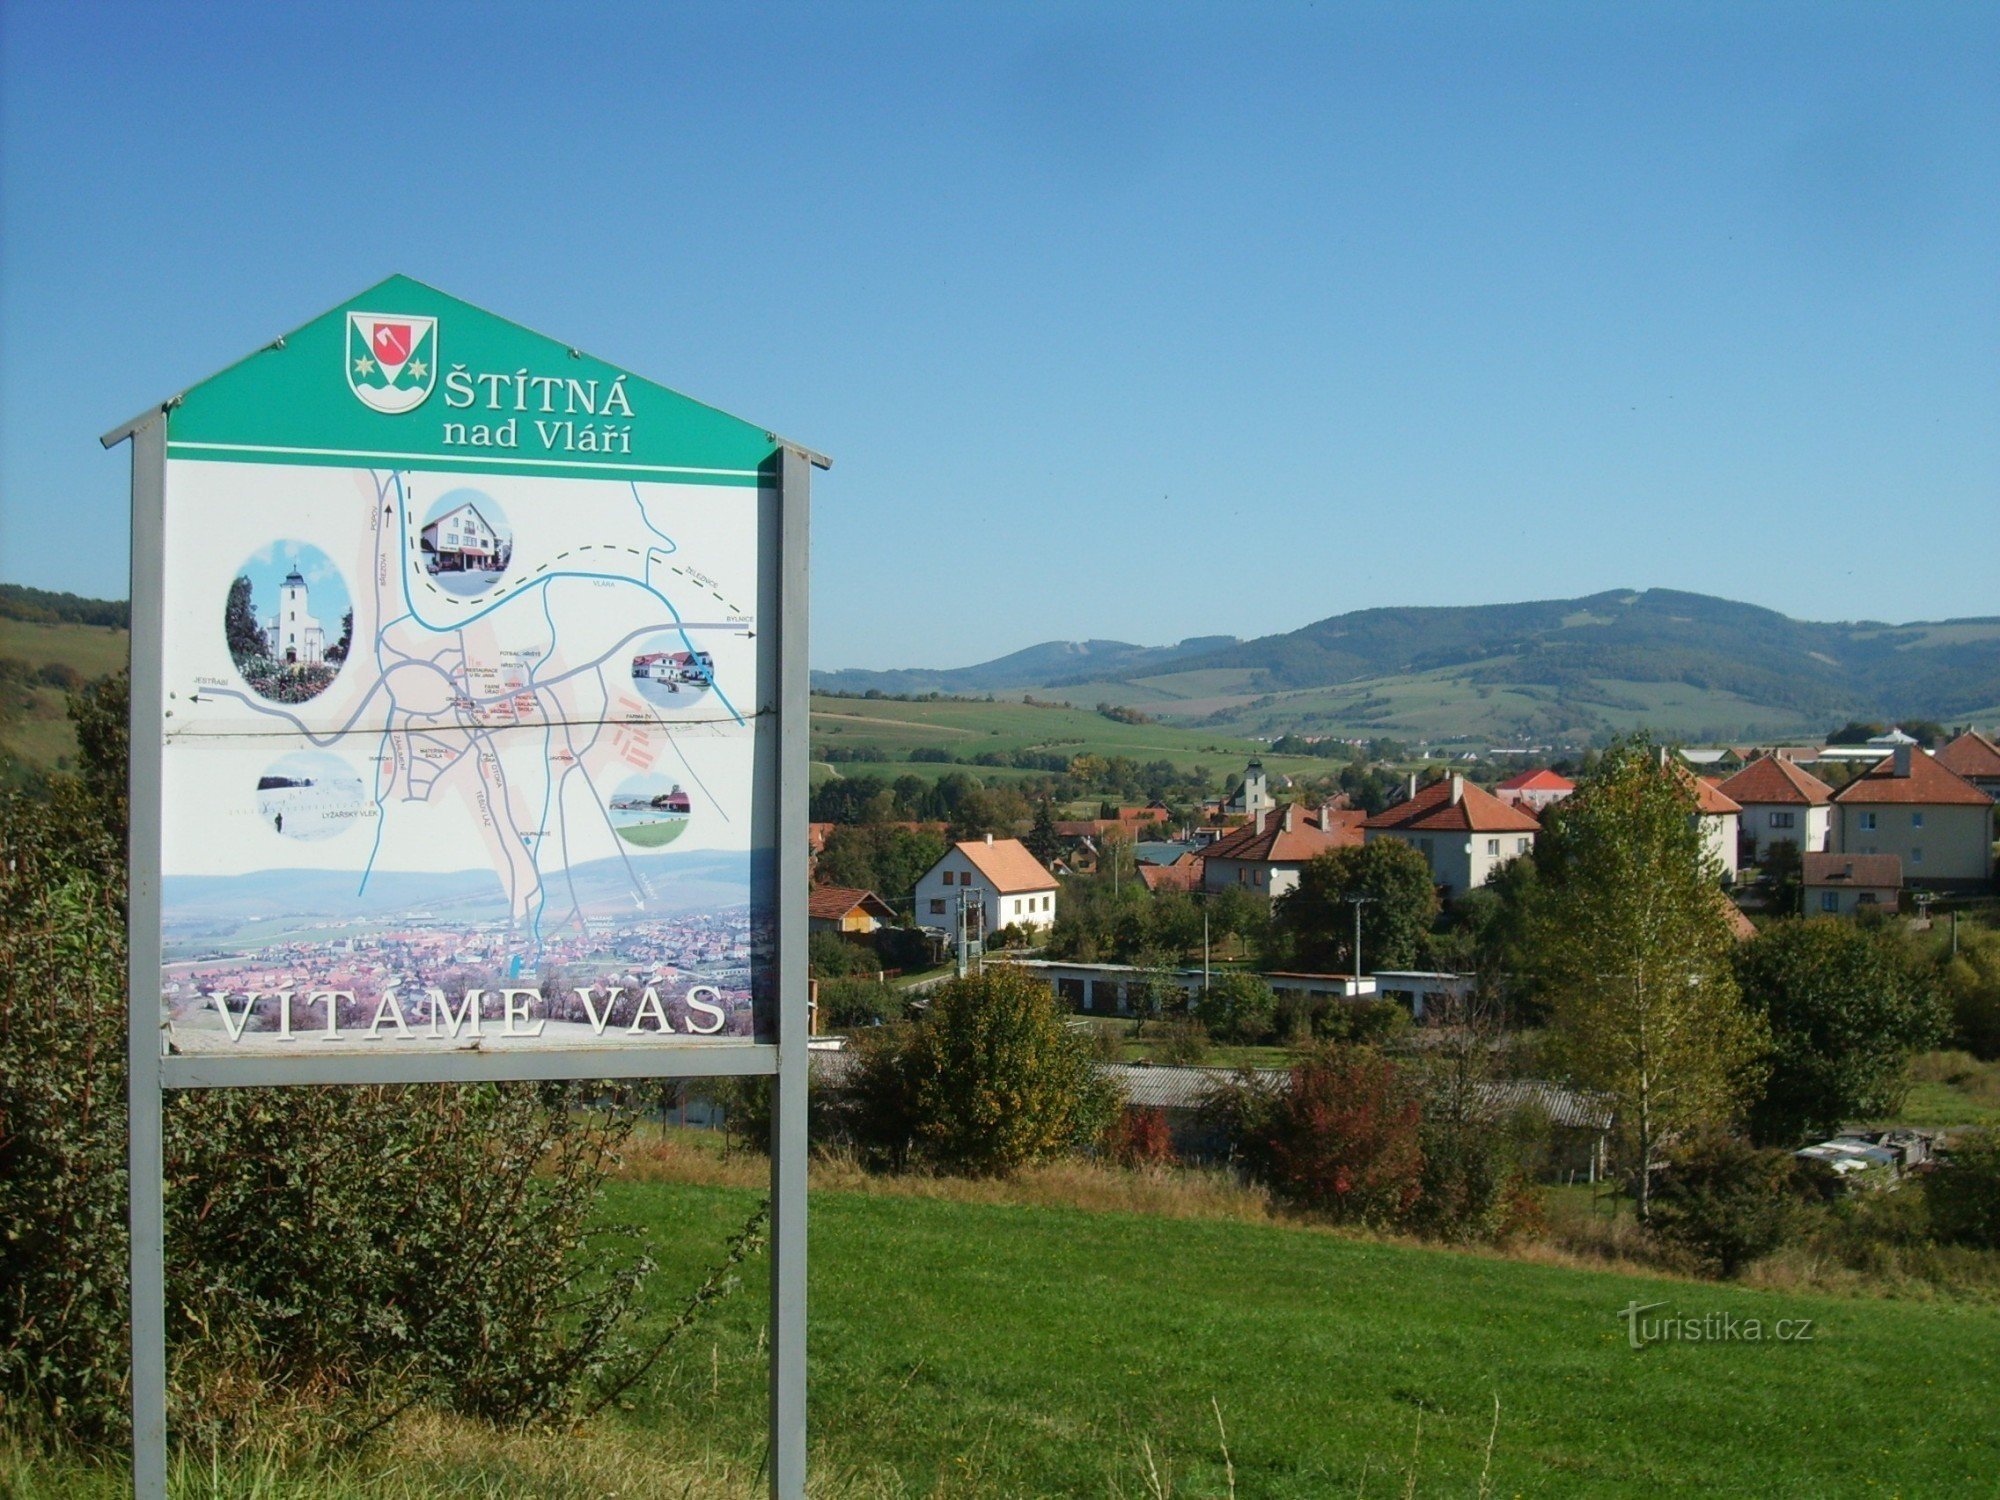 vue du village de Štítna nad Vláří avec l'église